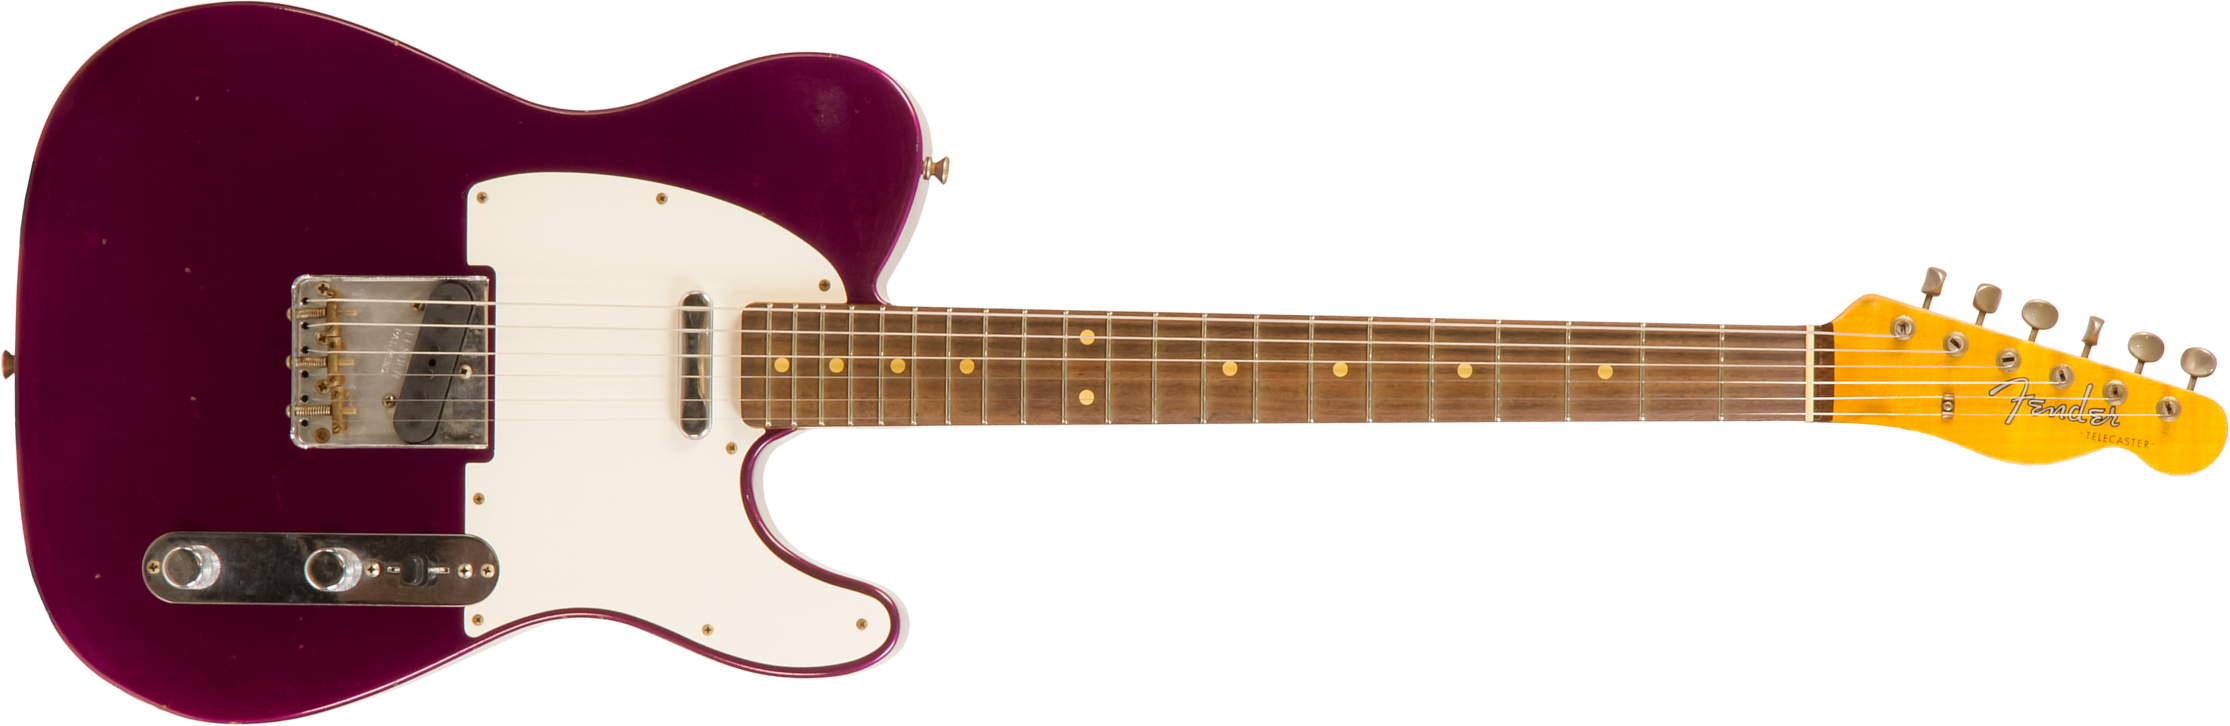 Fender Custom Shop Tele 1960 Rw #cz549121 - Journeyman Relic Purple Metallic - Televorm elektrische gitaar - Main picture